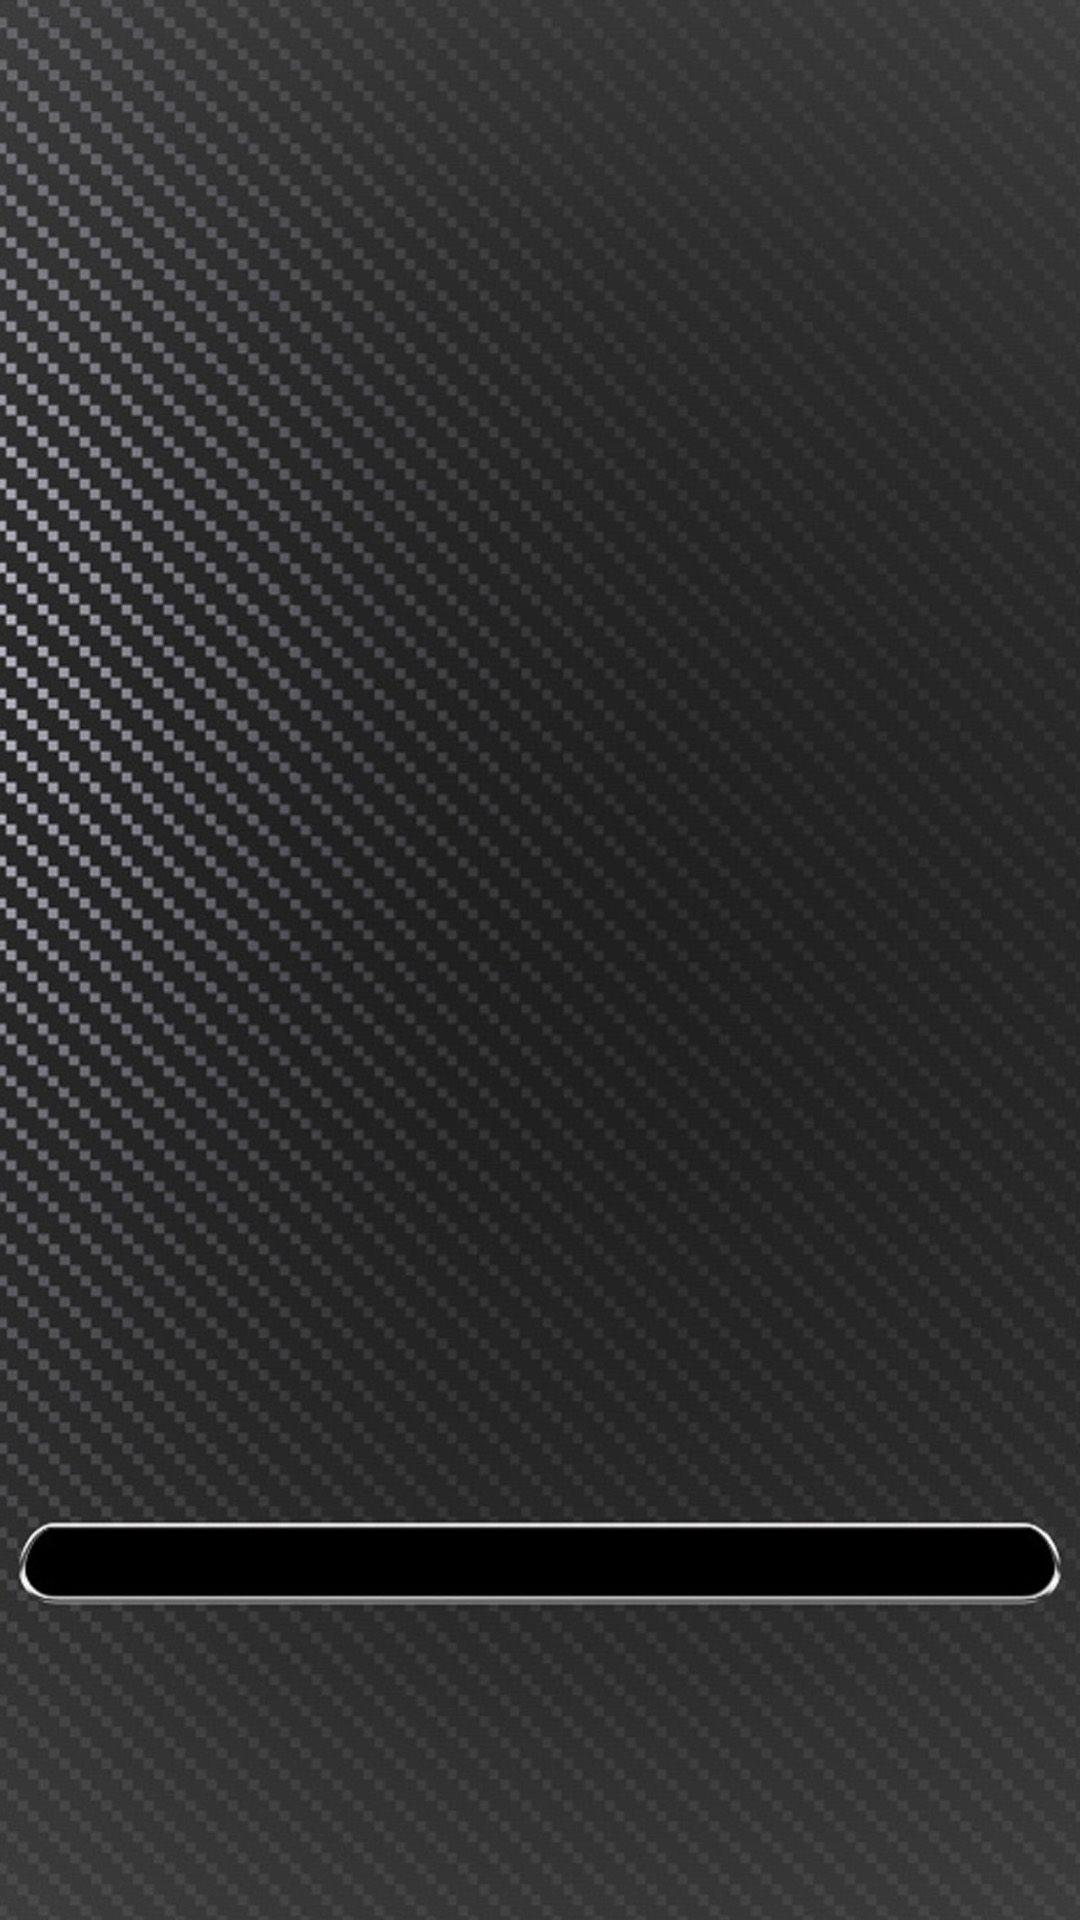 Carbon Fiber Samsung Wallpaper, Samsung Galaxy S Galaxy S4